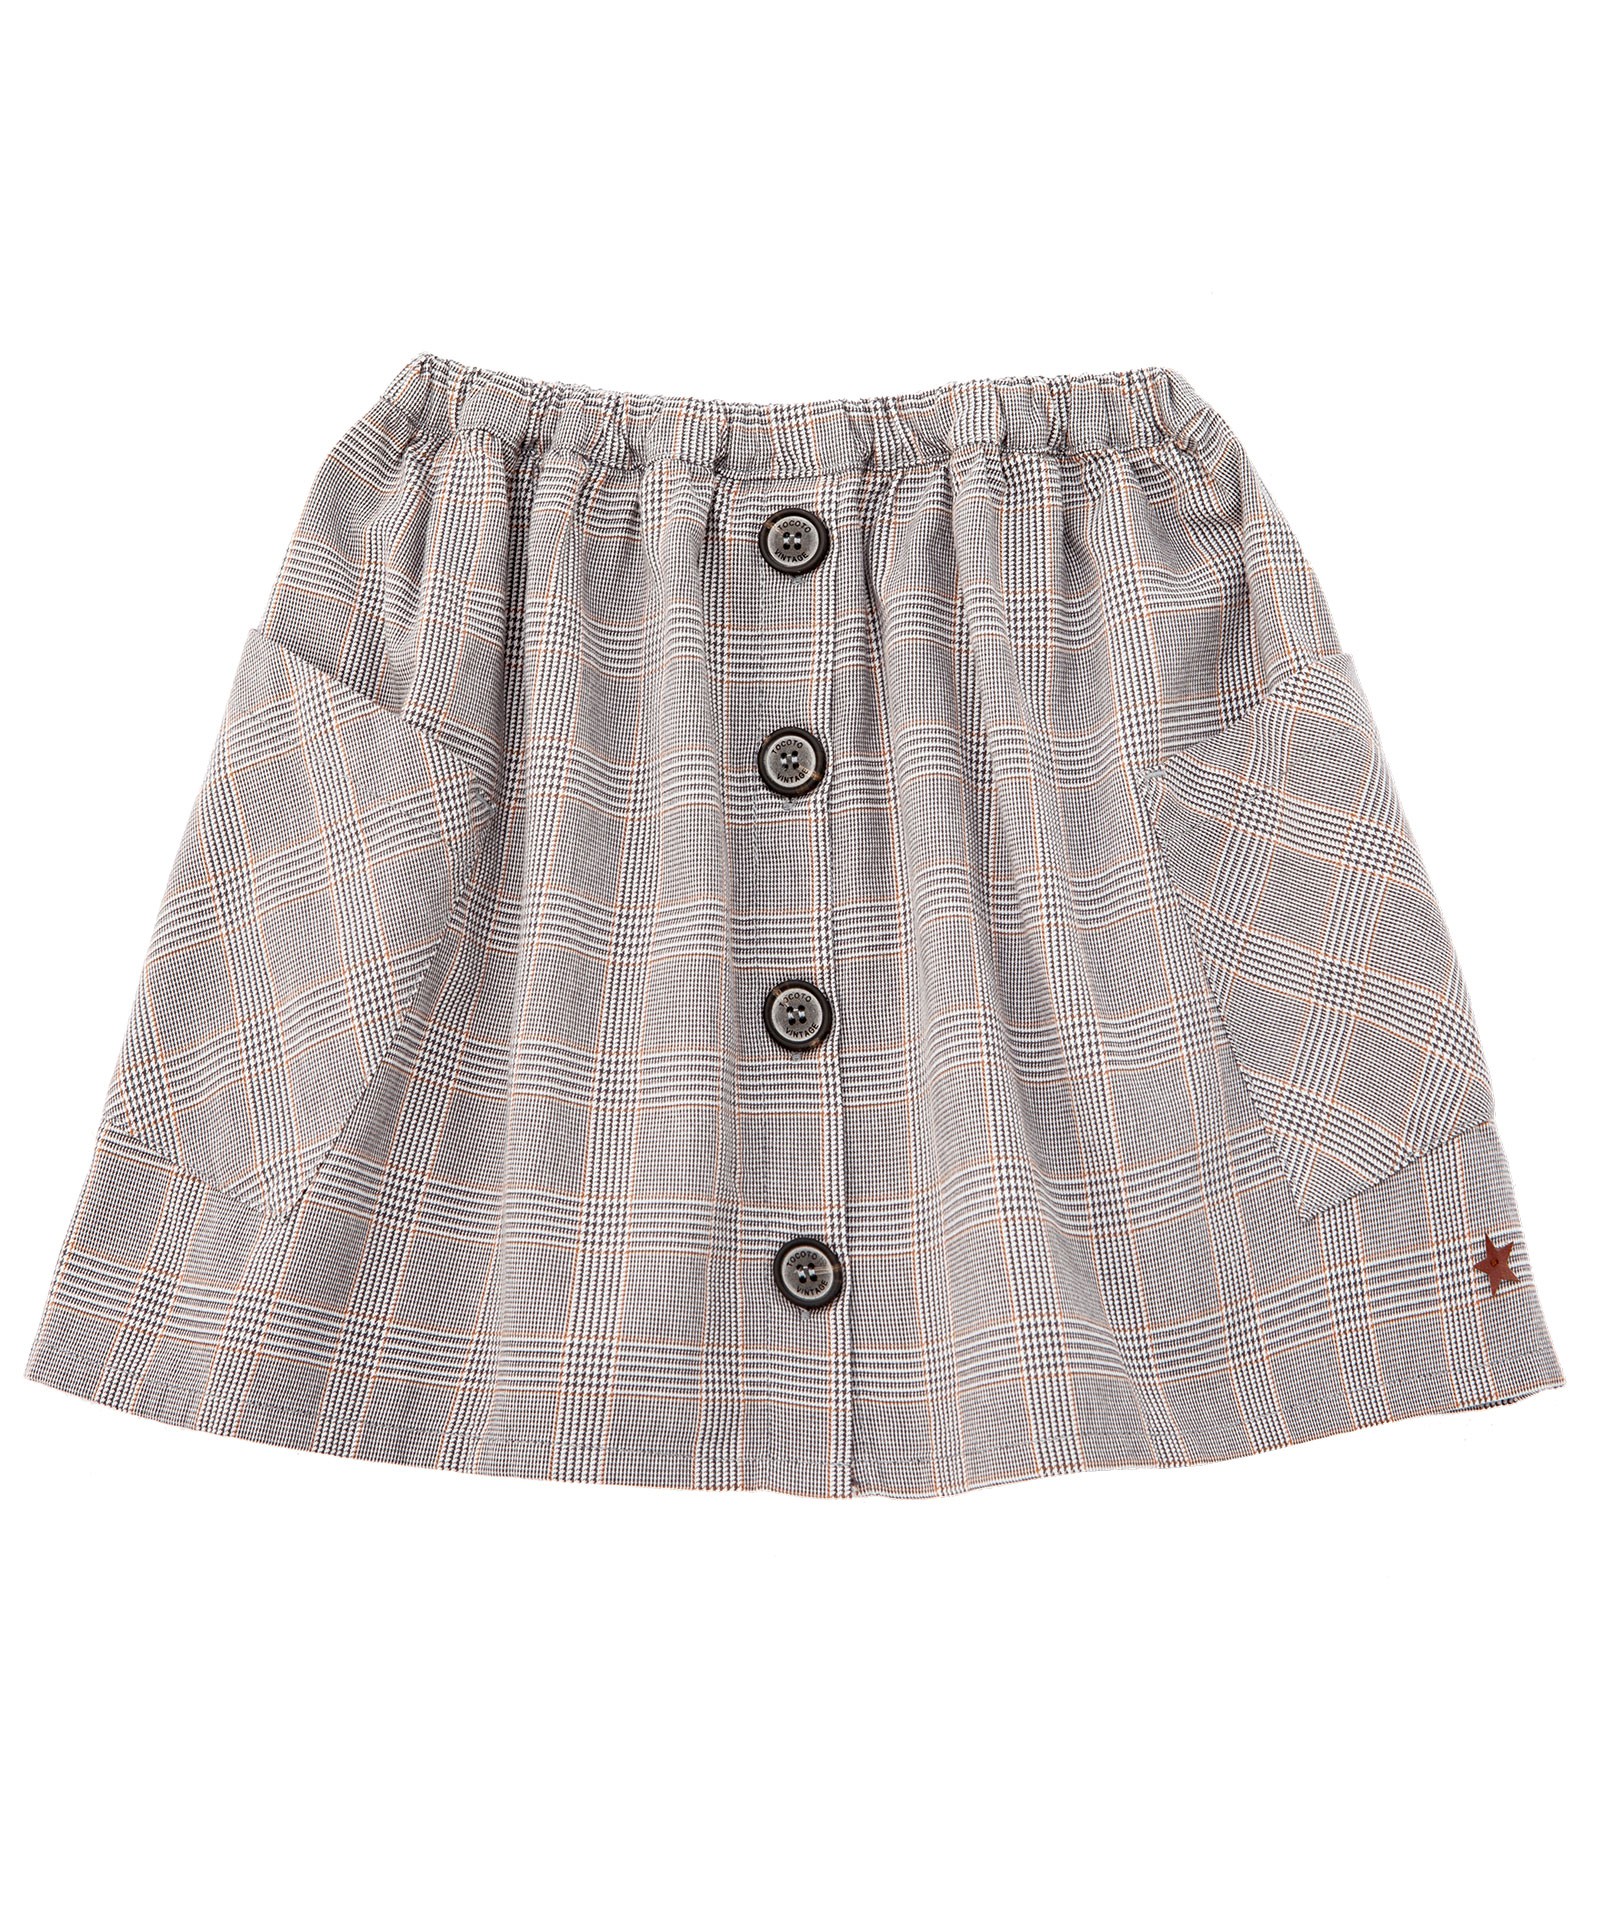 button down grey skirt